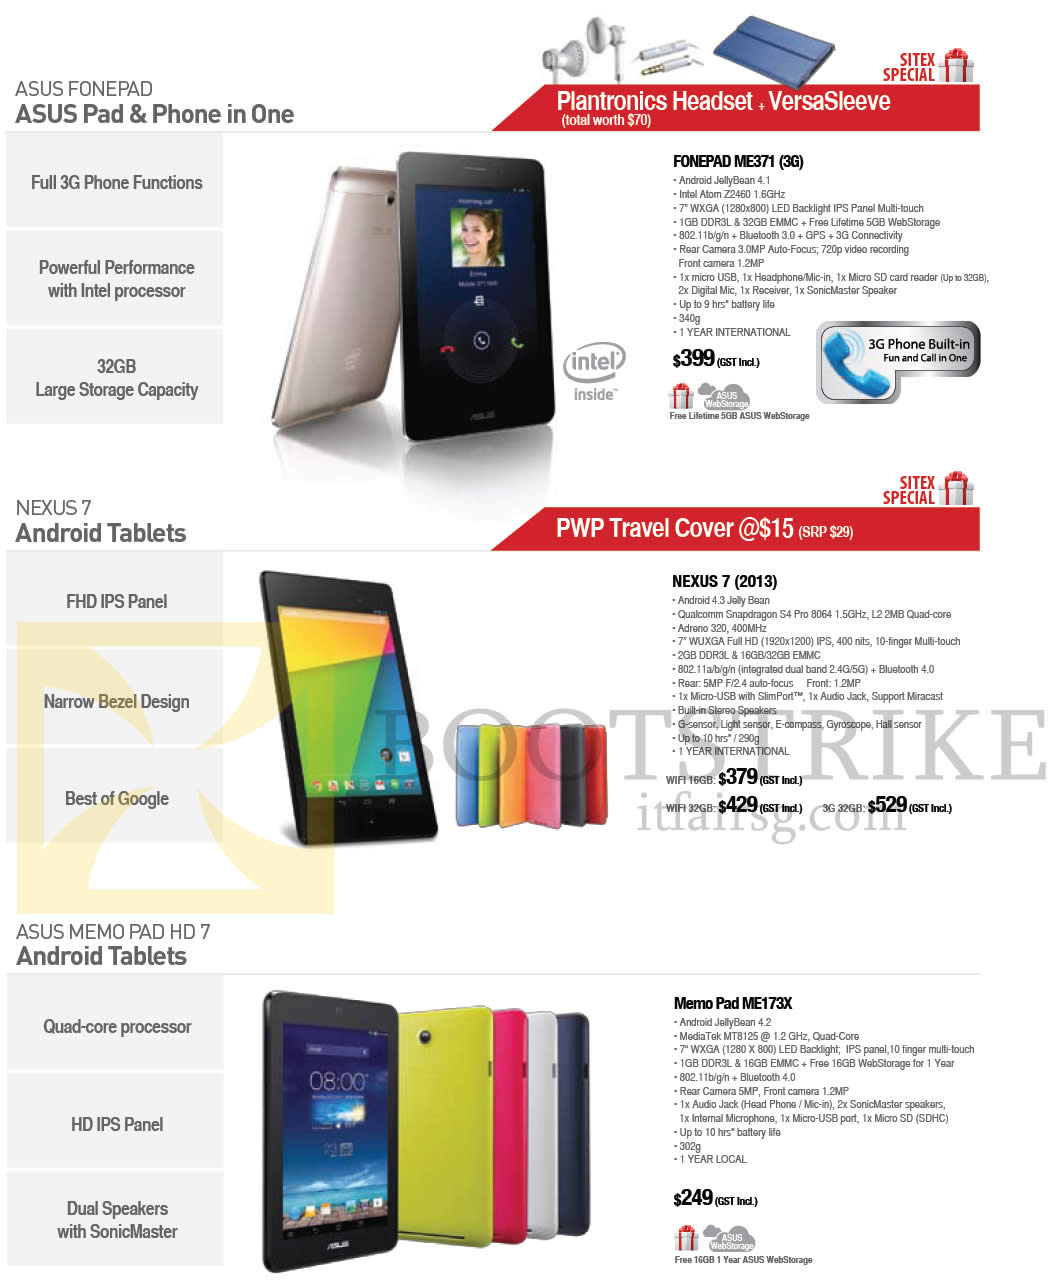 SITEX 2013 price list image brochure of ASUS Fonepad, Tablets Android, Fonepad ME371, Nexus 7, MemoPad ME173X